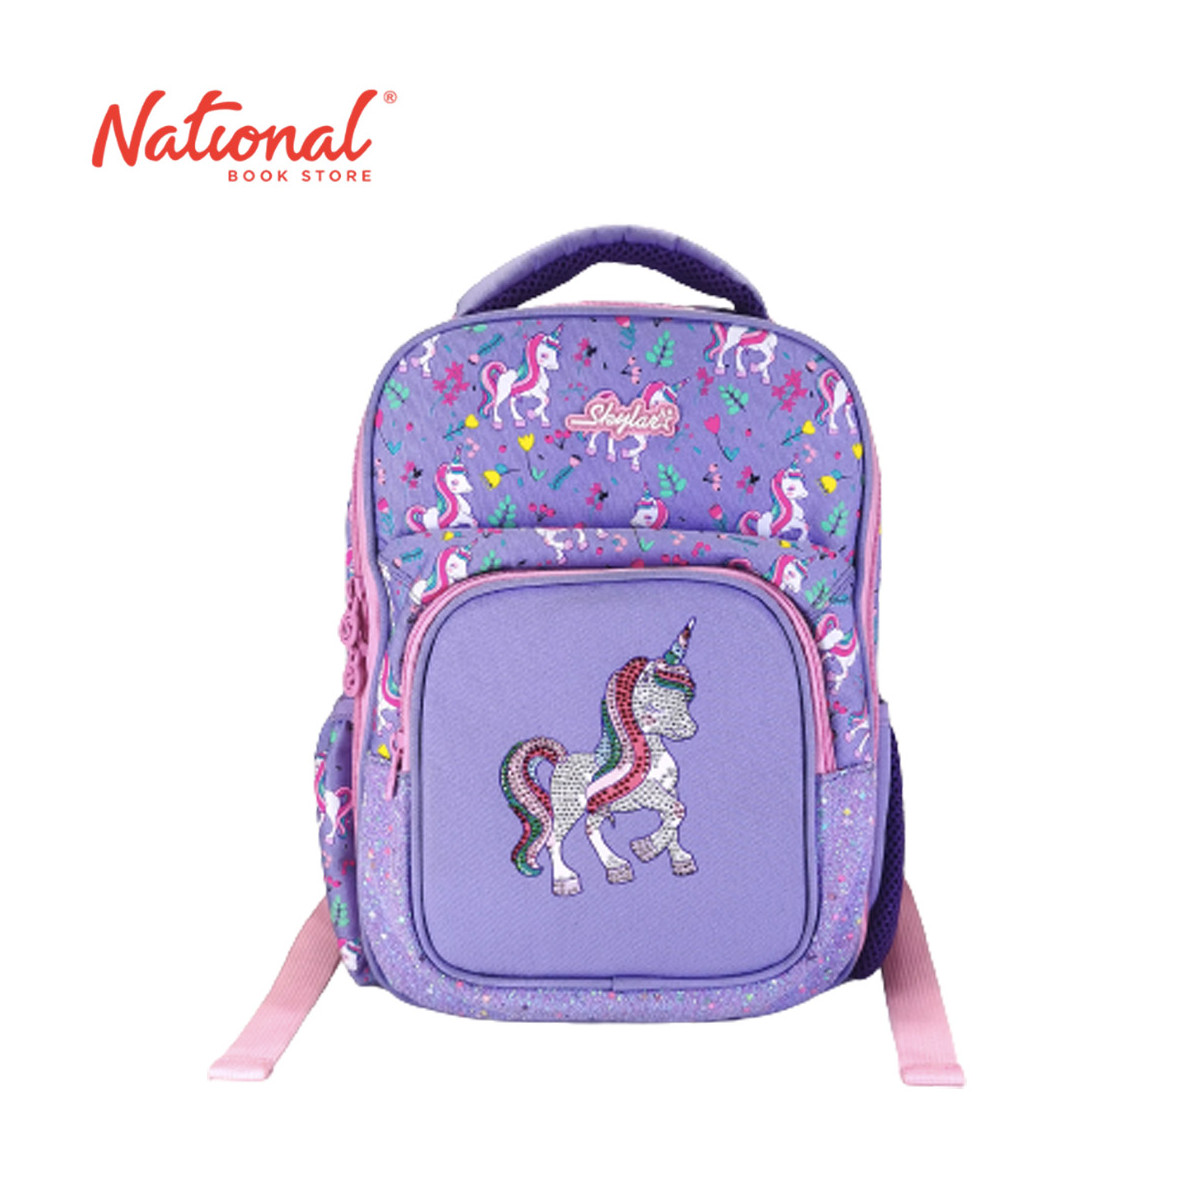 Skylar Backpack MBP39-UI04 Unicorn - School Bags